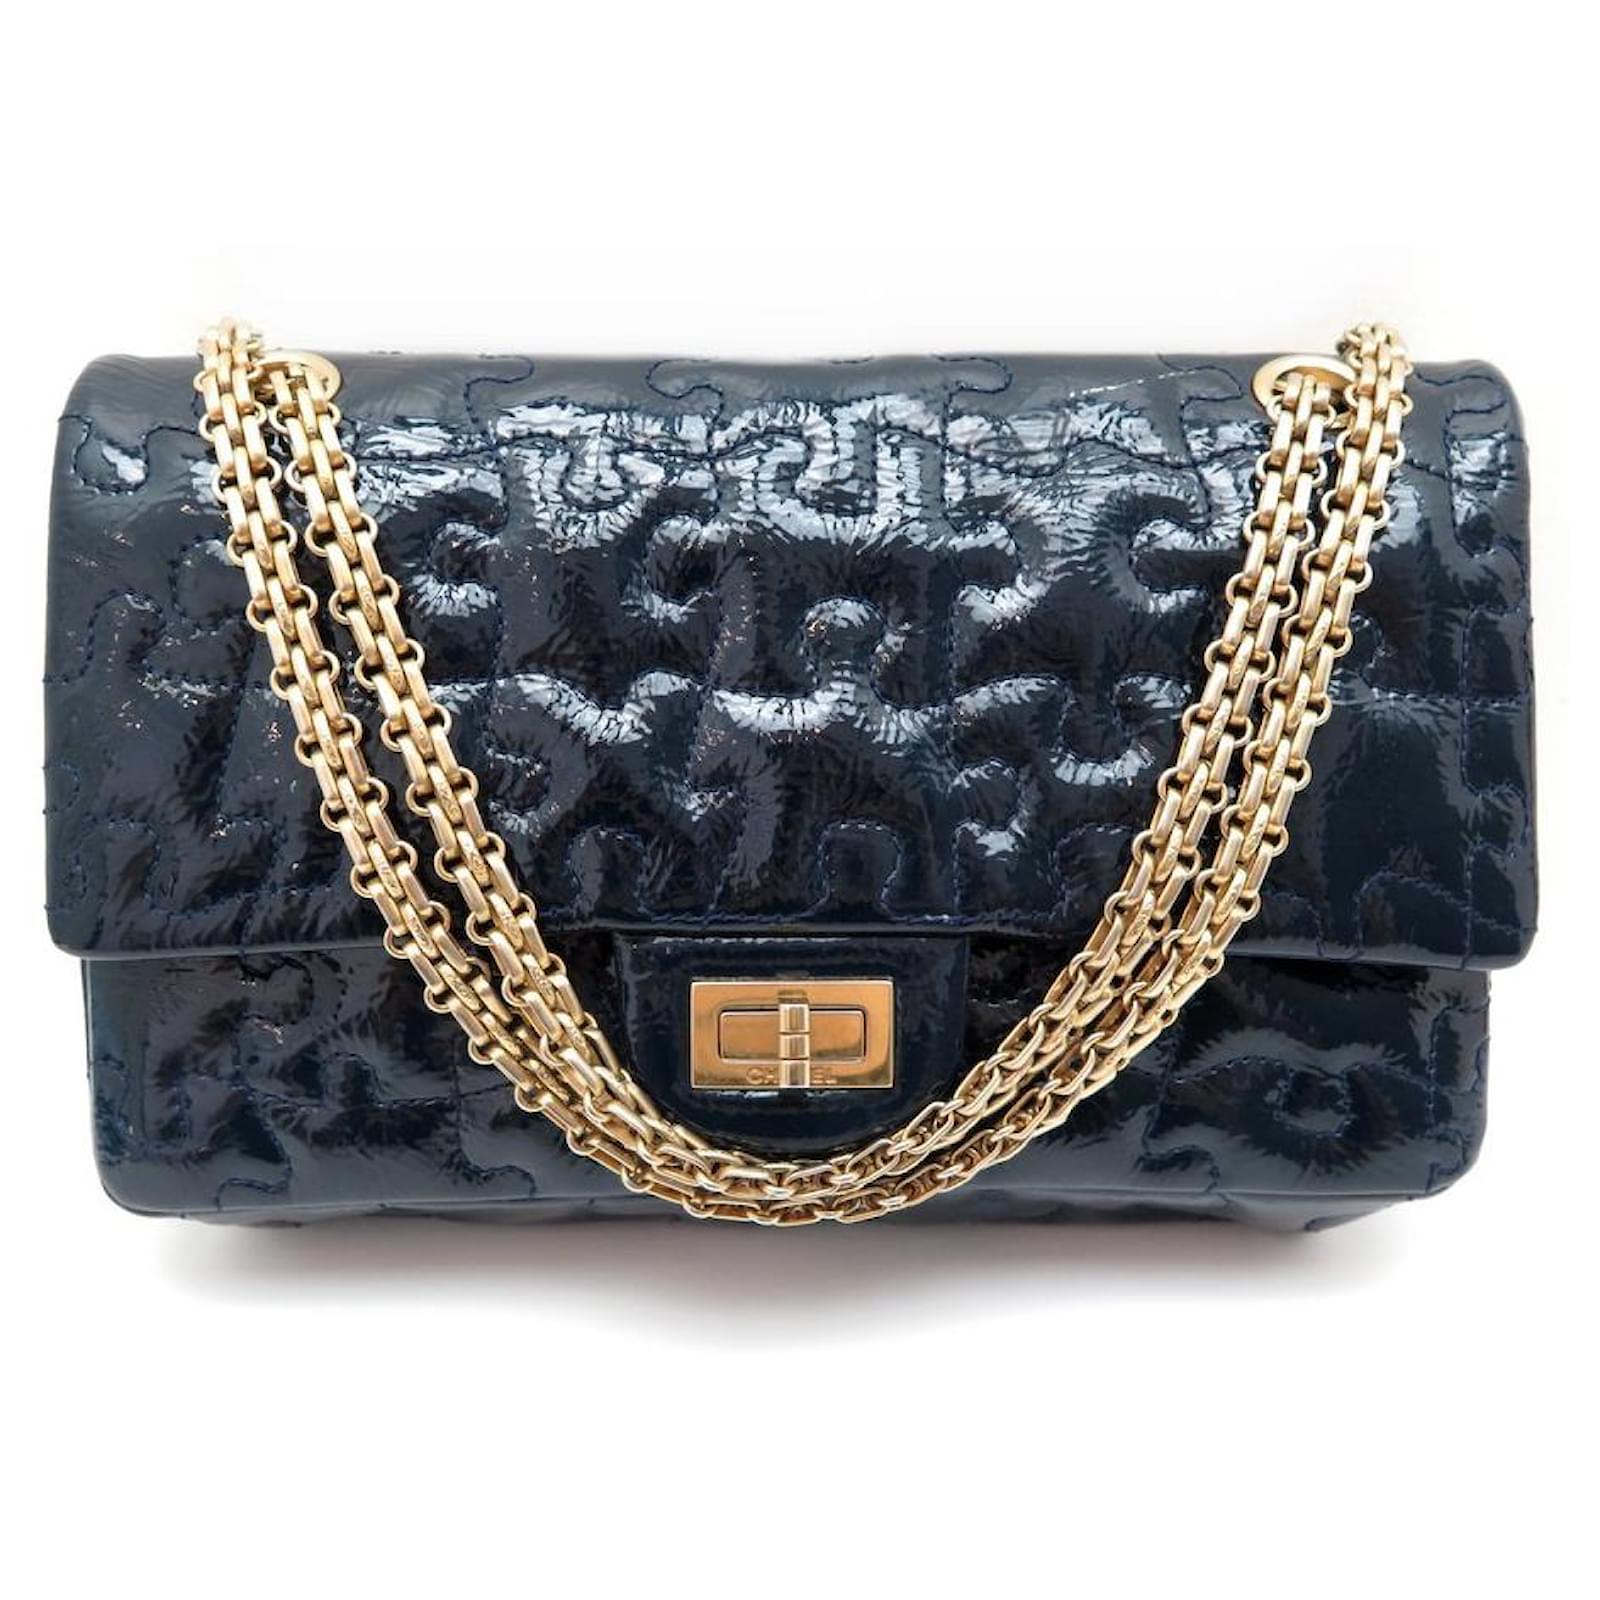 Handbags Chanel Chanel Handbag 2.55 Puzzle mm Crossbody in Blue Patent Leather Handbag